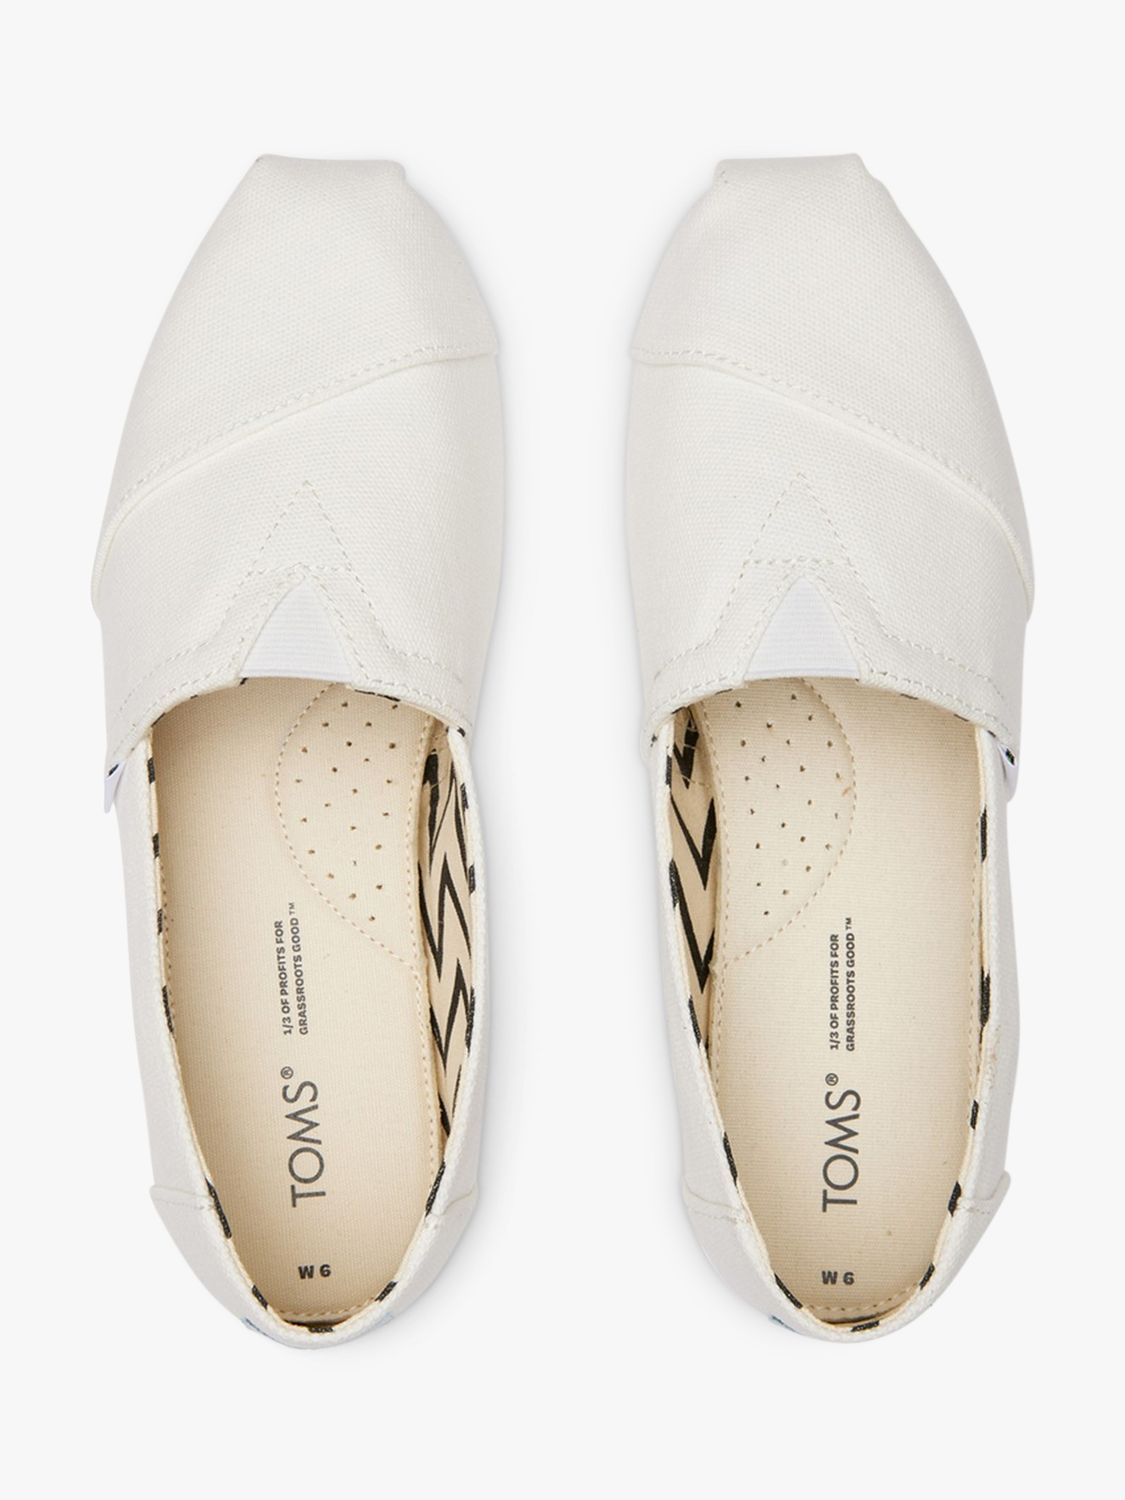 TOMS Alpargata Espadrille Shoes, White at John Lewis & Partners